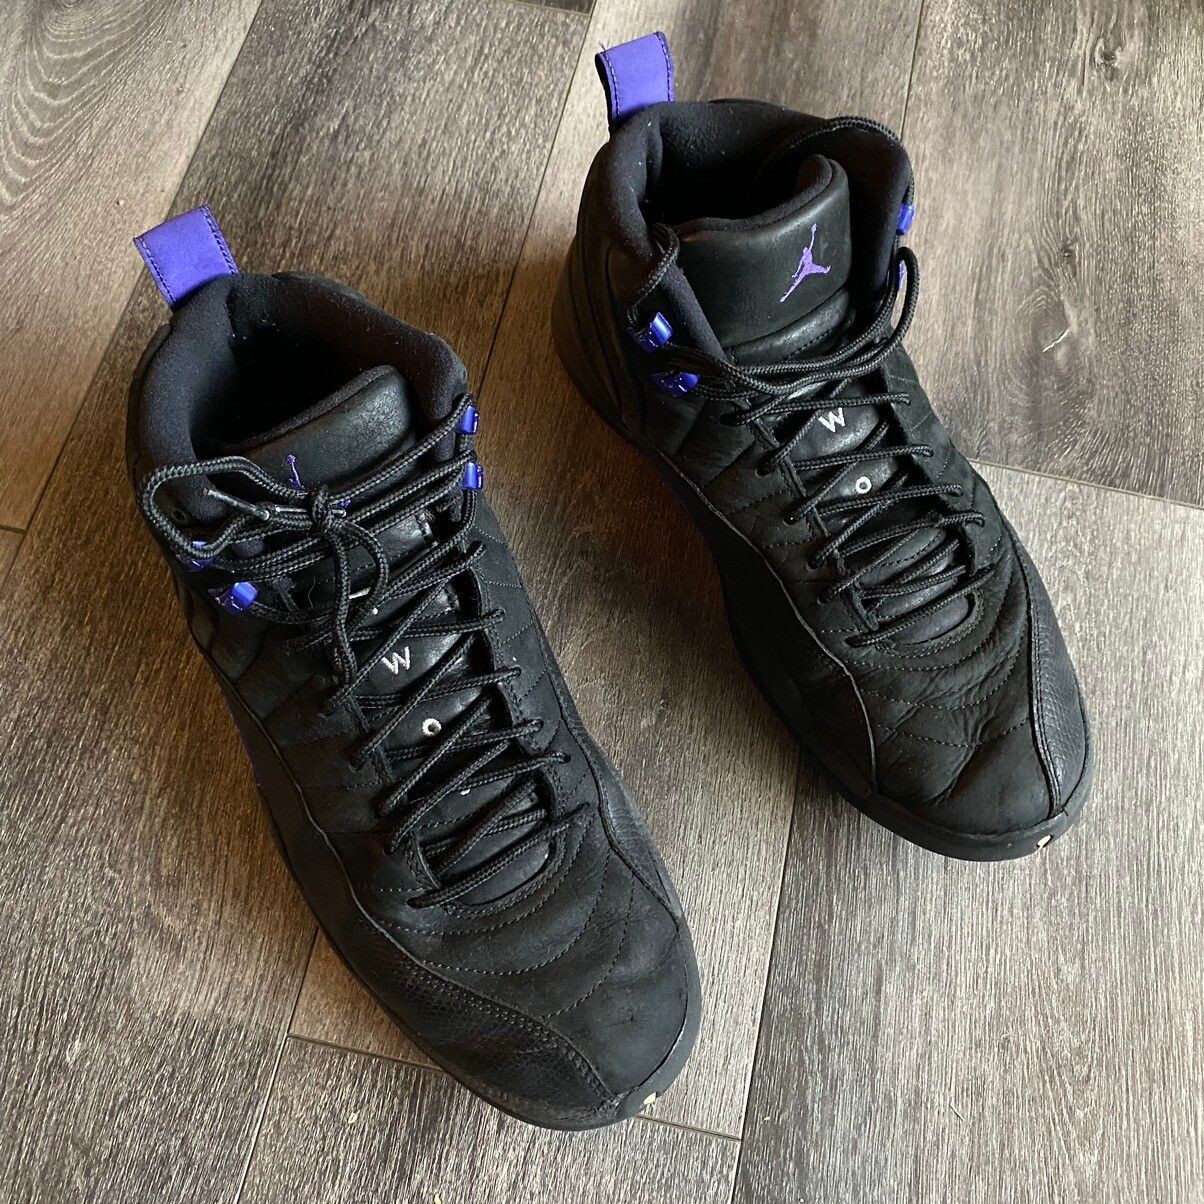 Pre-owned Jordan Brand Air Jordan 12 Retro Black Dark Concord 2020 Shoes In Black/dark Concord Purple